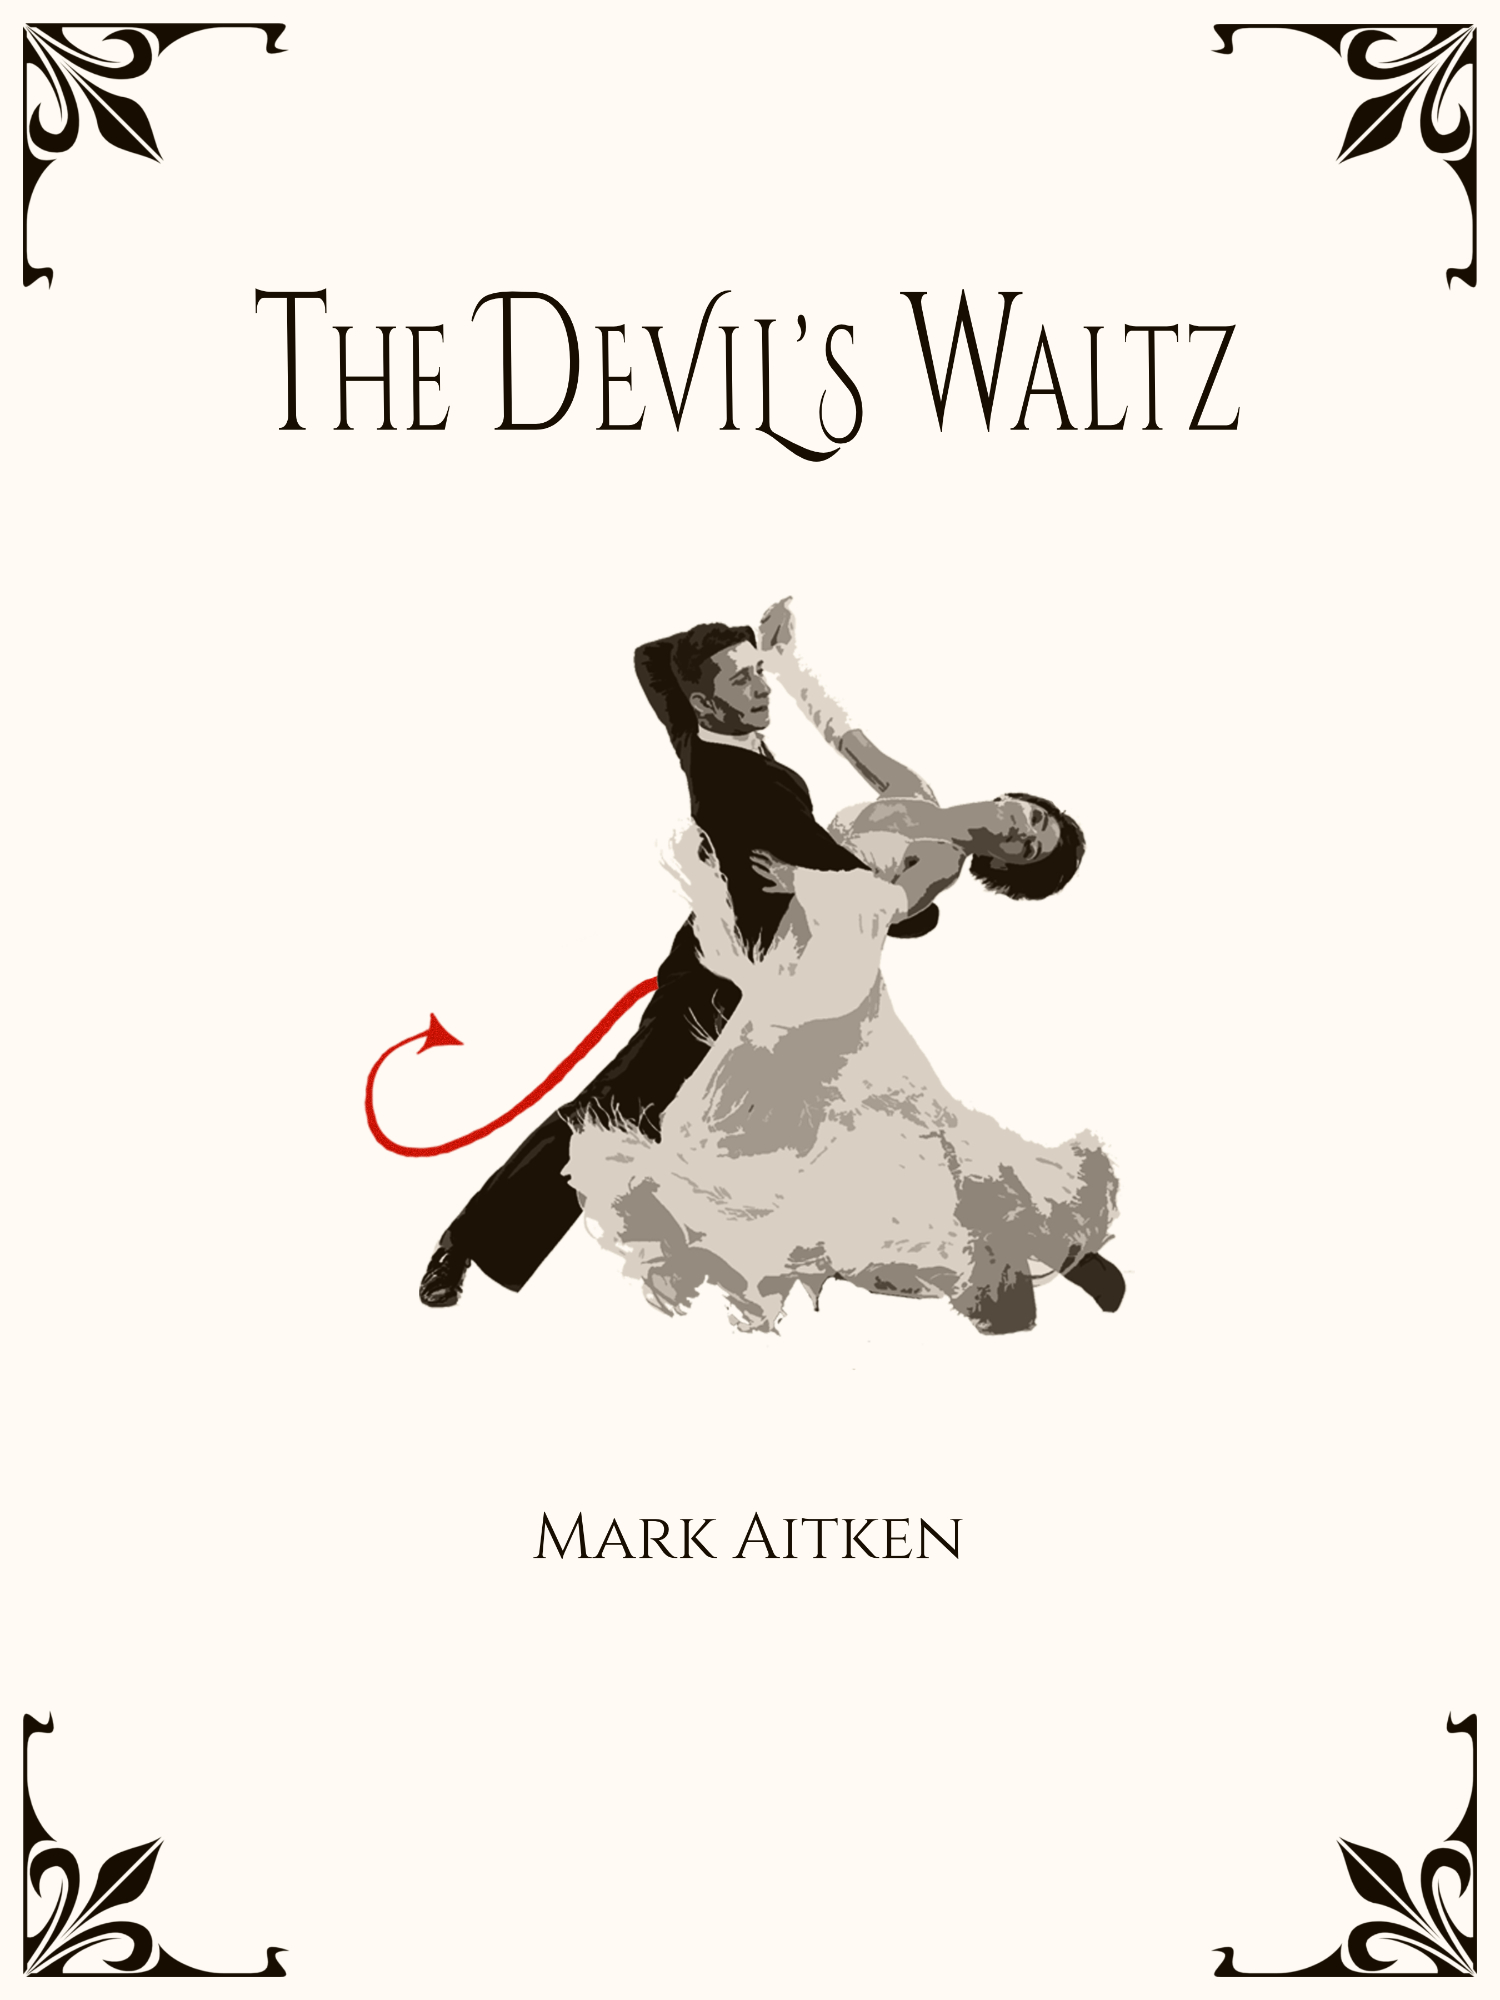 The Devil's Waltz